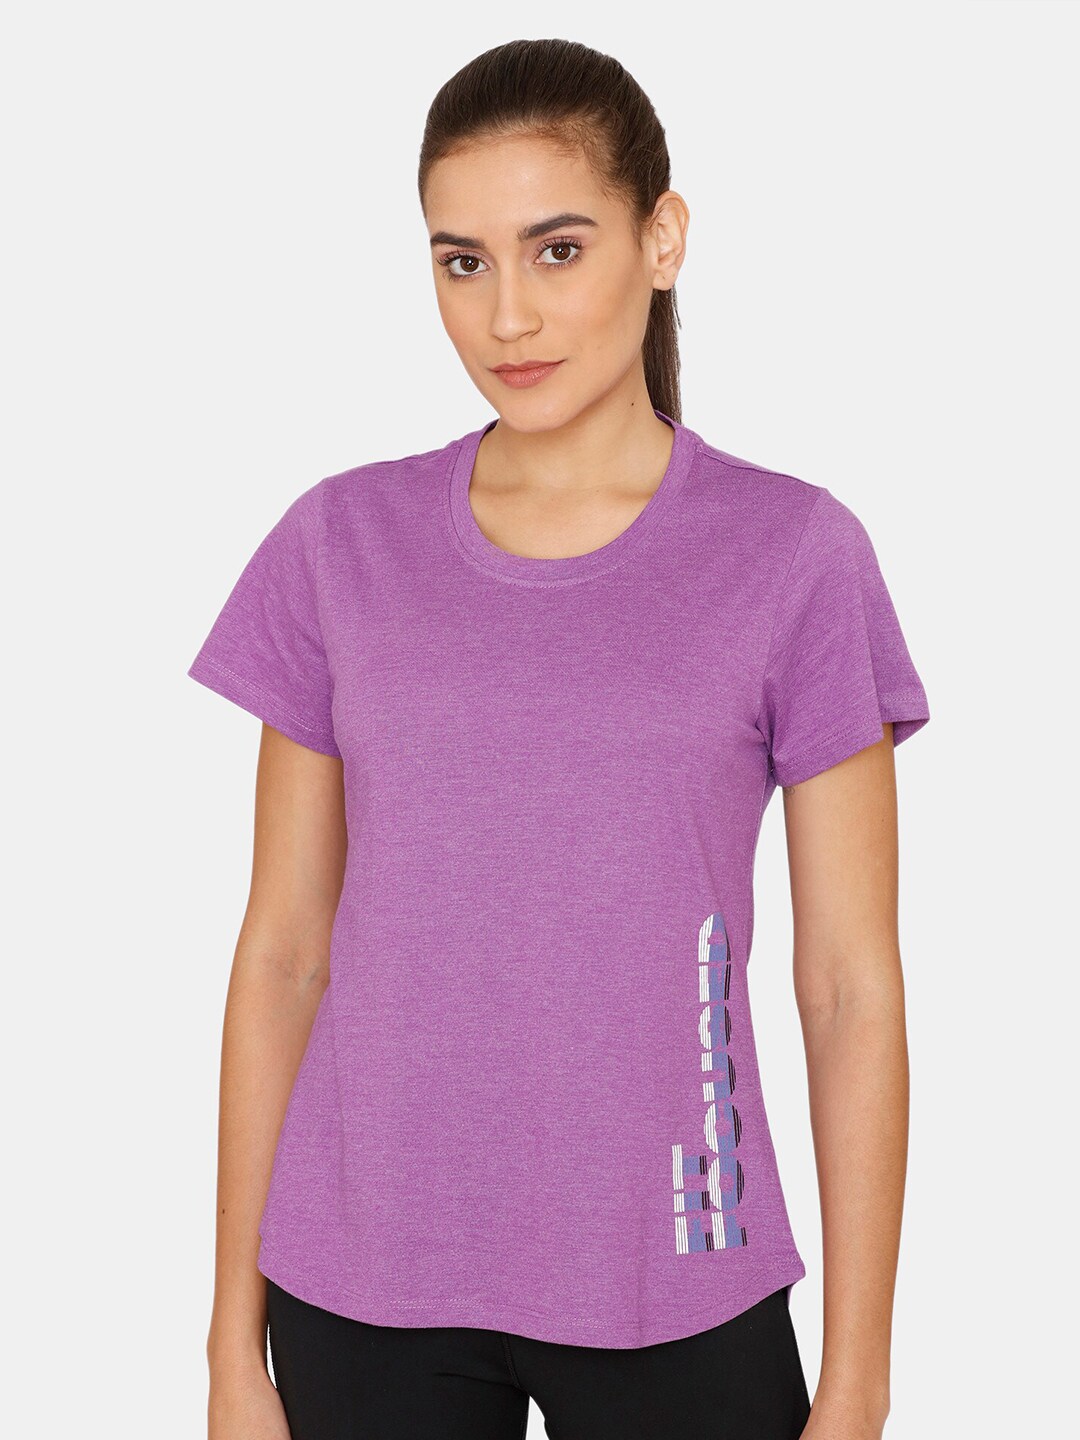 Rosaline by Zivame Women Purple Typography Printed T-shirt Price in India